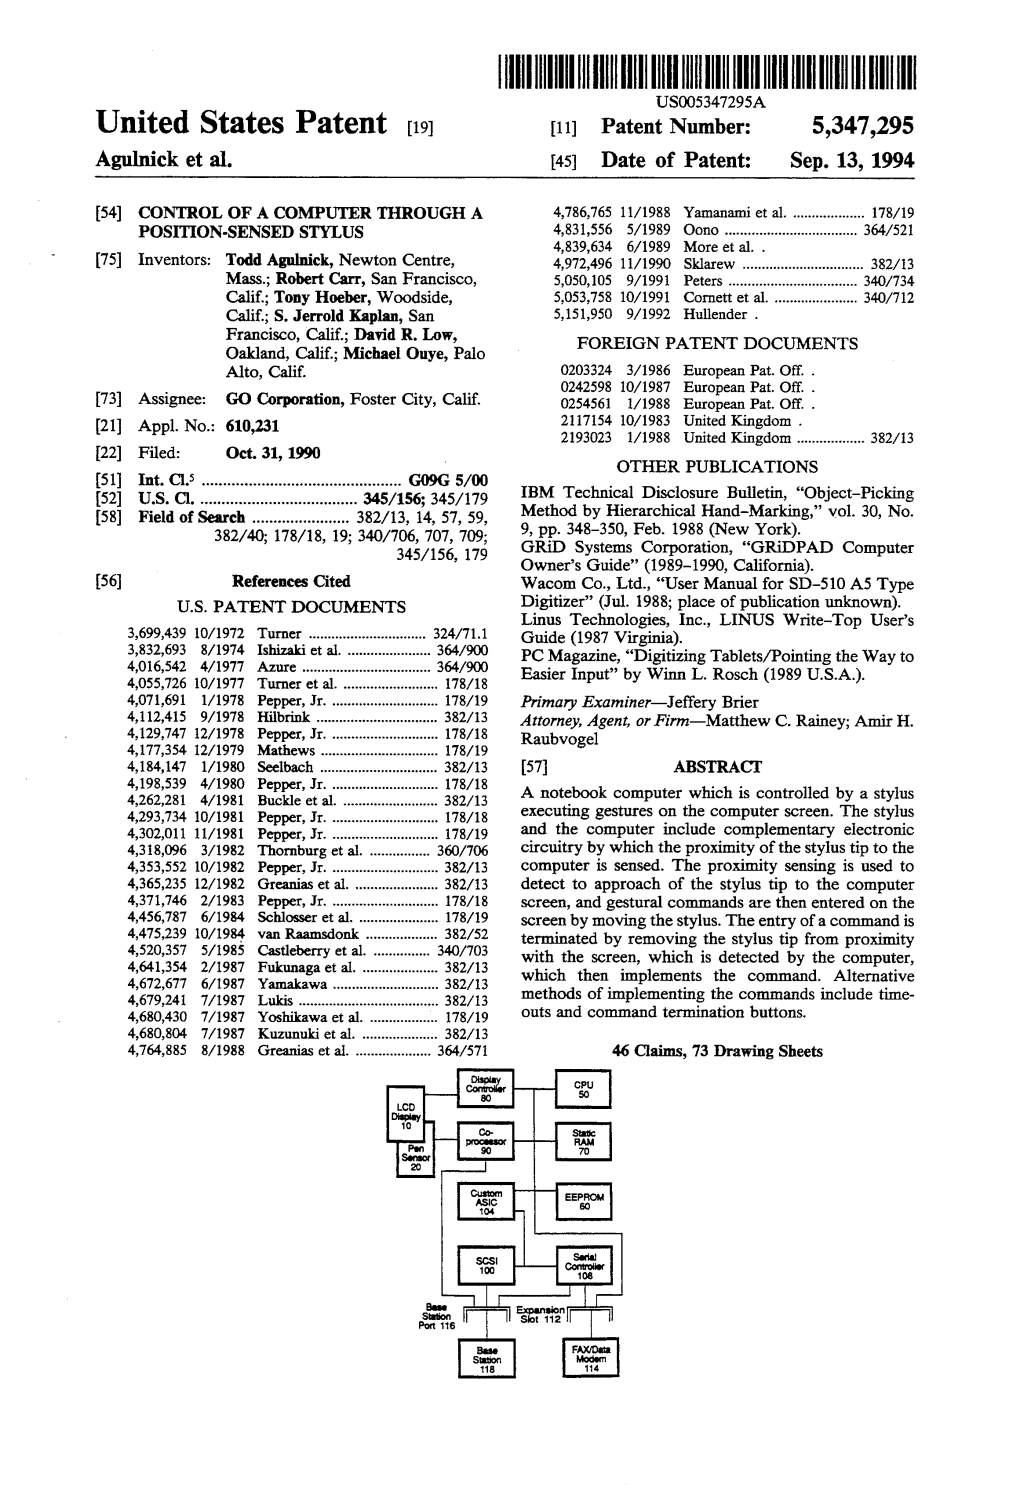 United States Patent (19) 11 Patent Number: 5,347,295 Agulnick Et Al